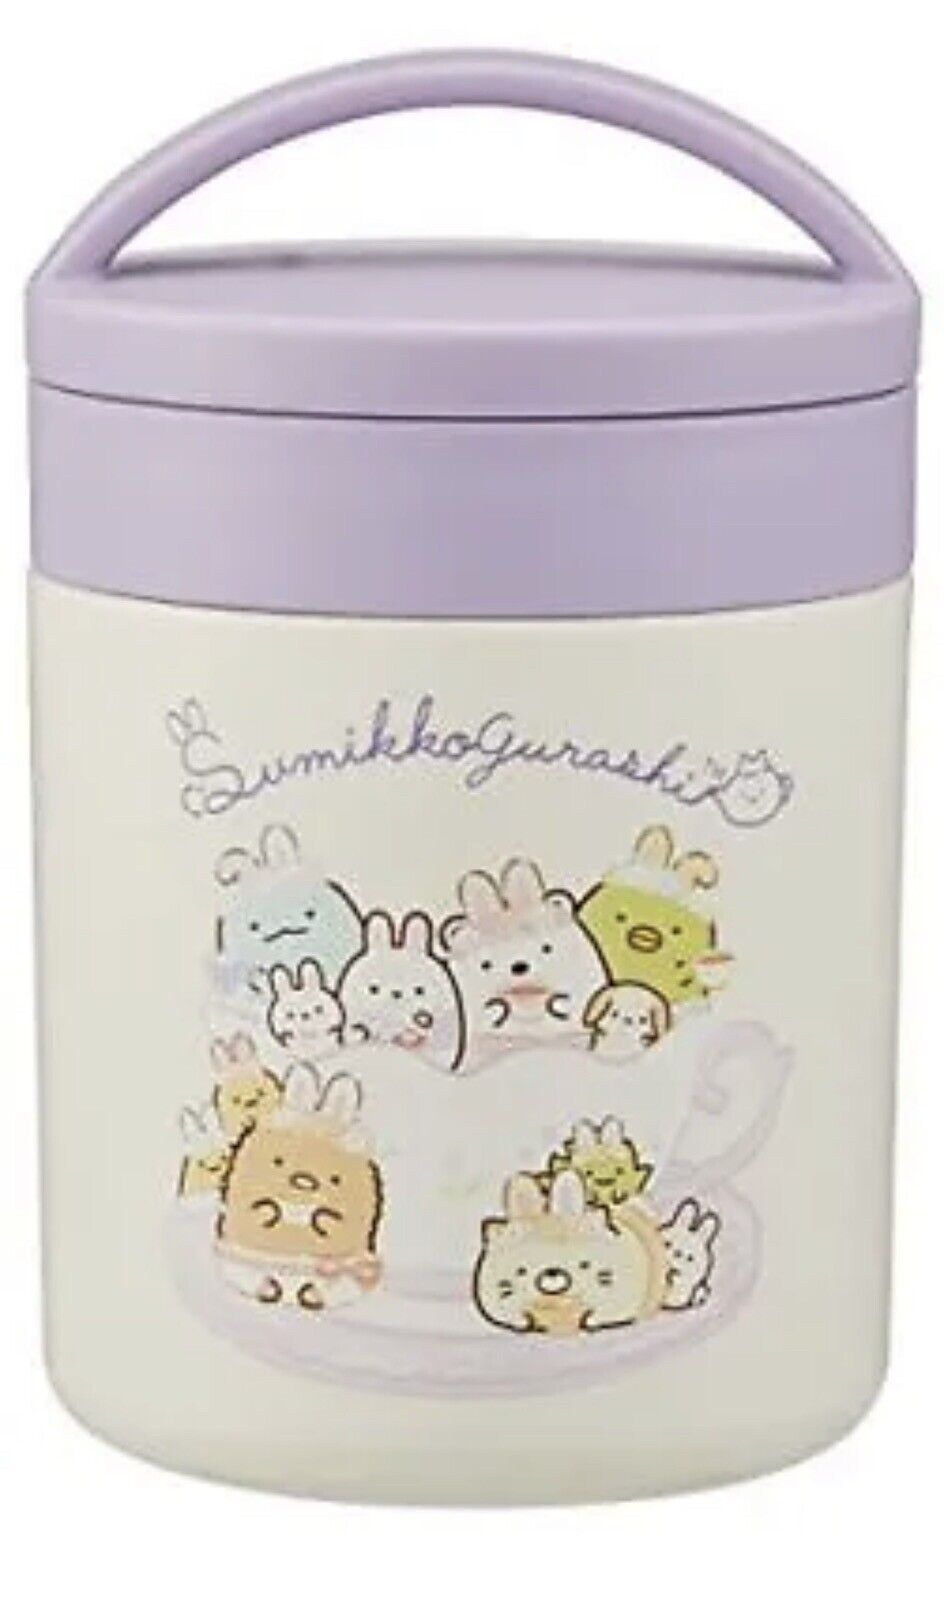 Sketer antibacterial Thermal Soup Jar 300ml Sumikko Gurashi LJFC3AG-A BENTO